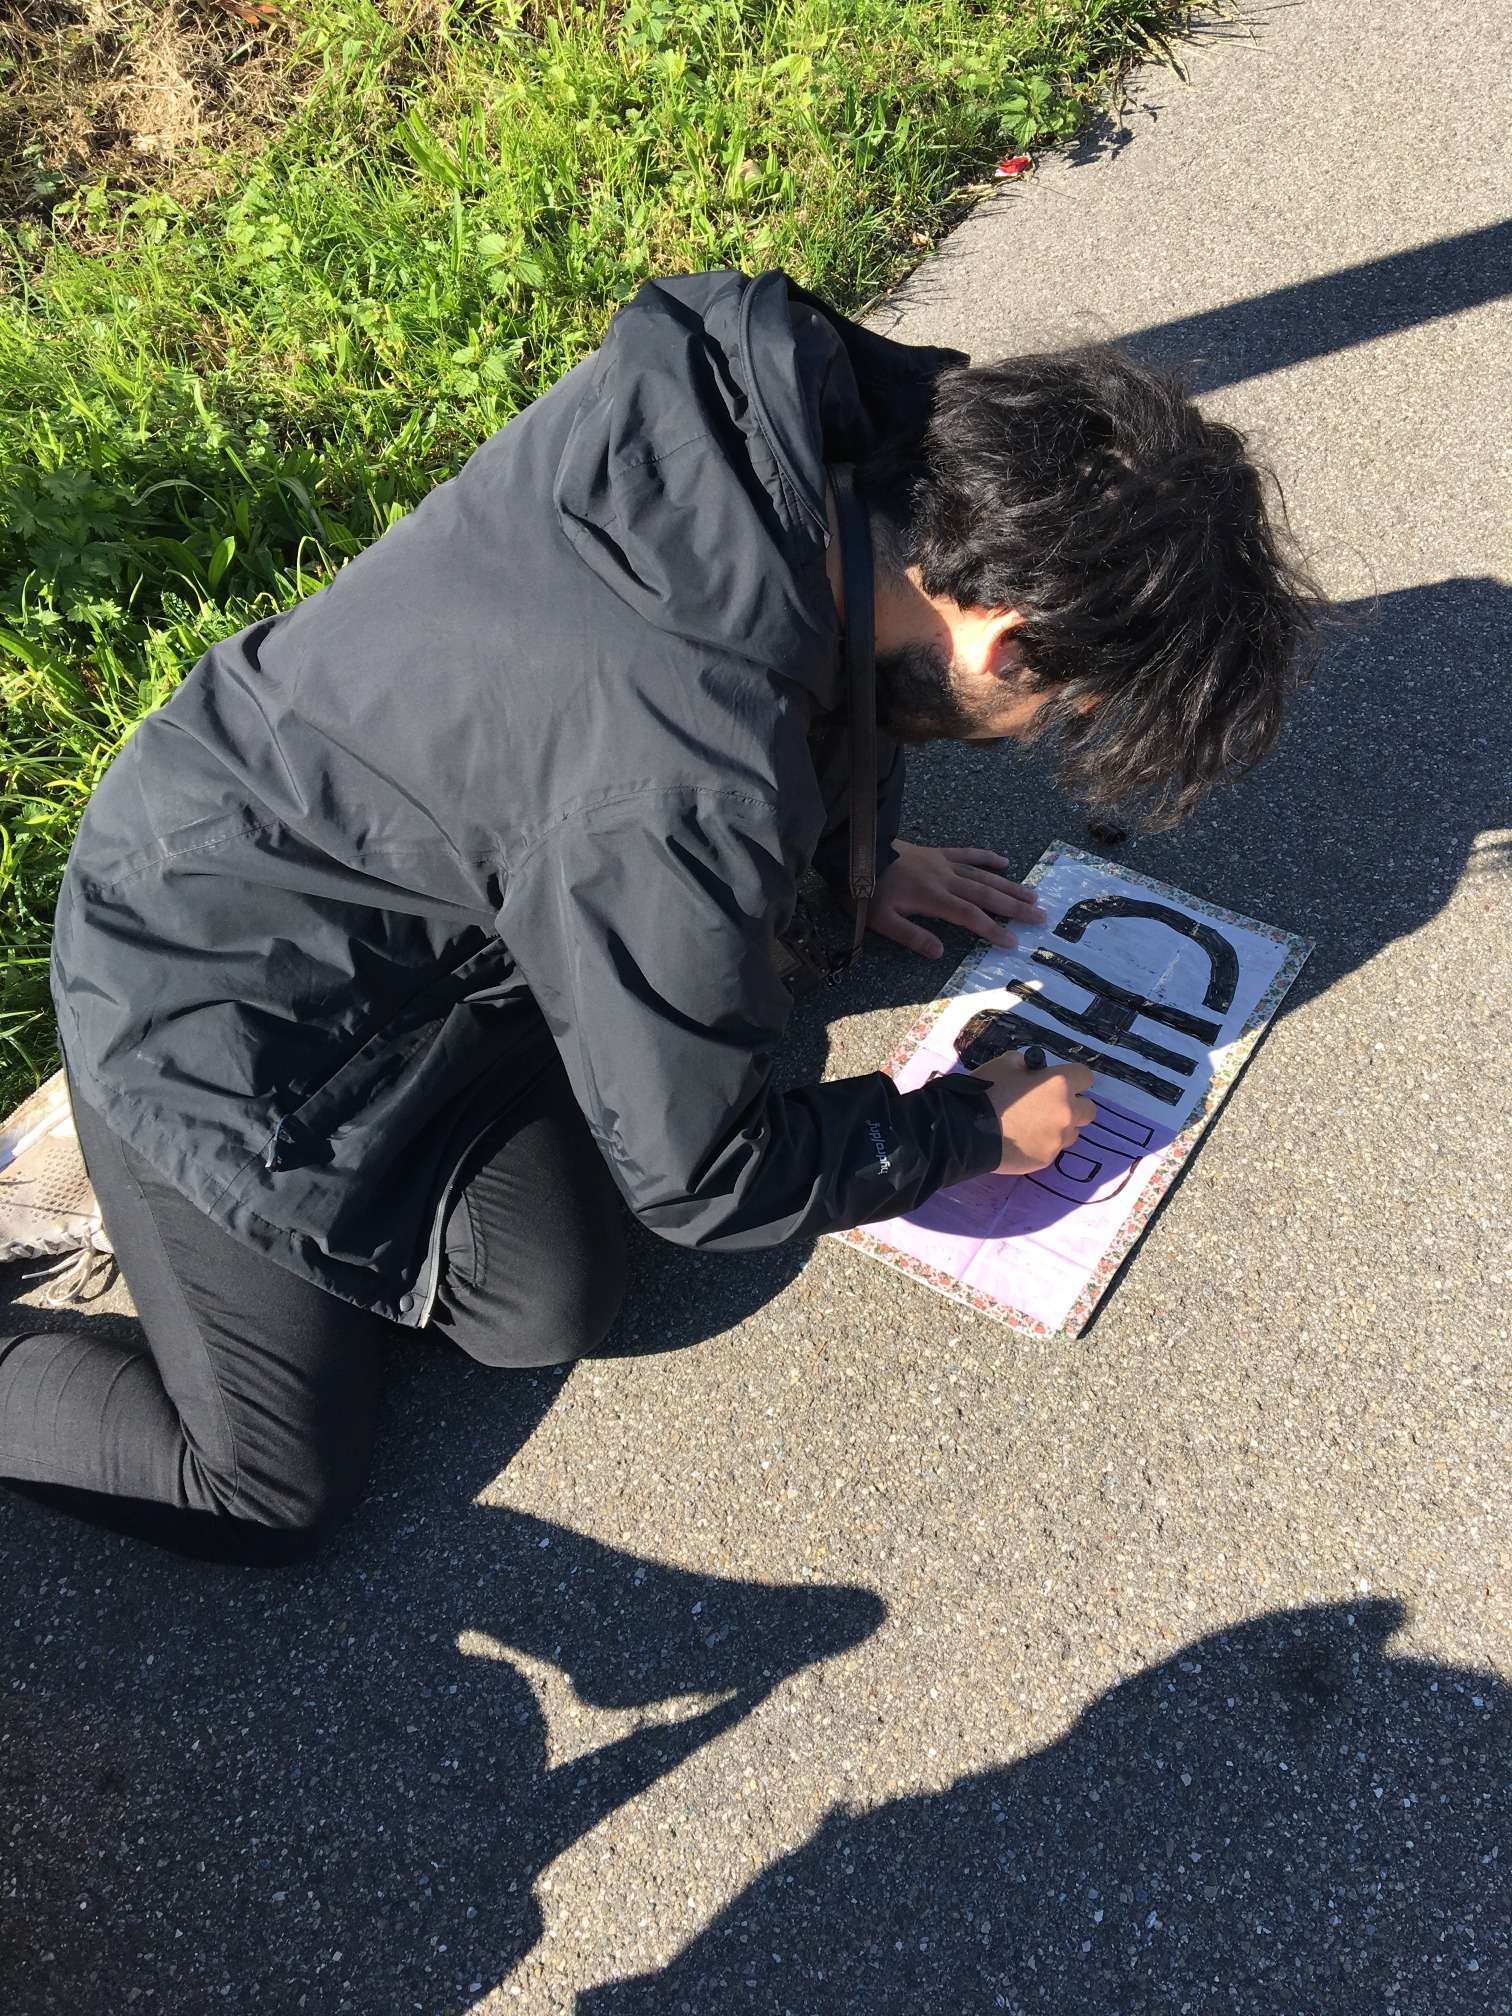 Aydin writing hitchhiking sign to Chur